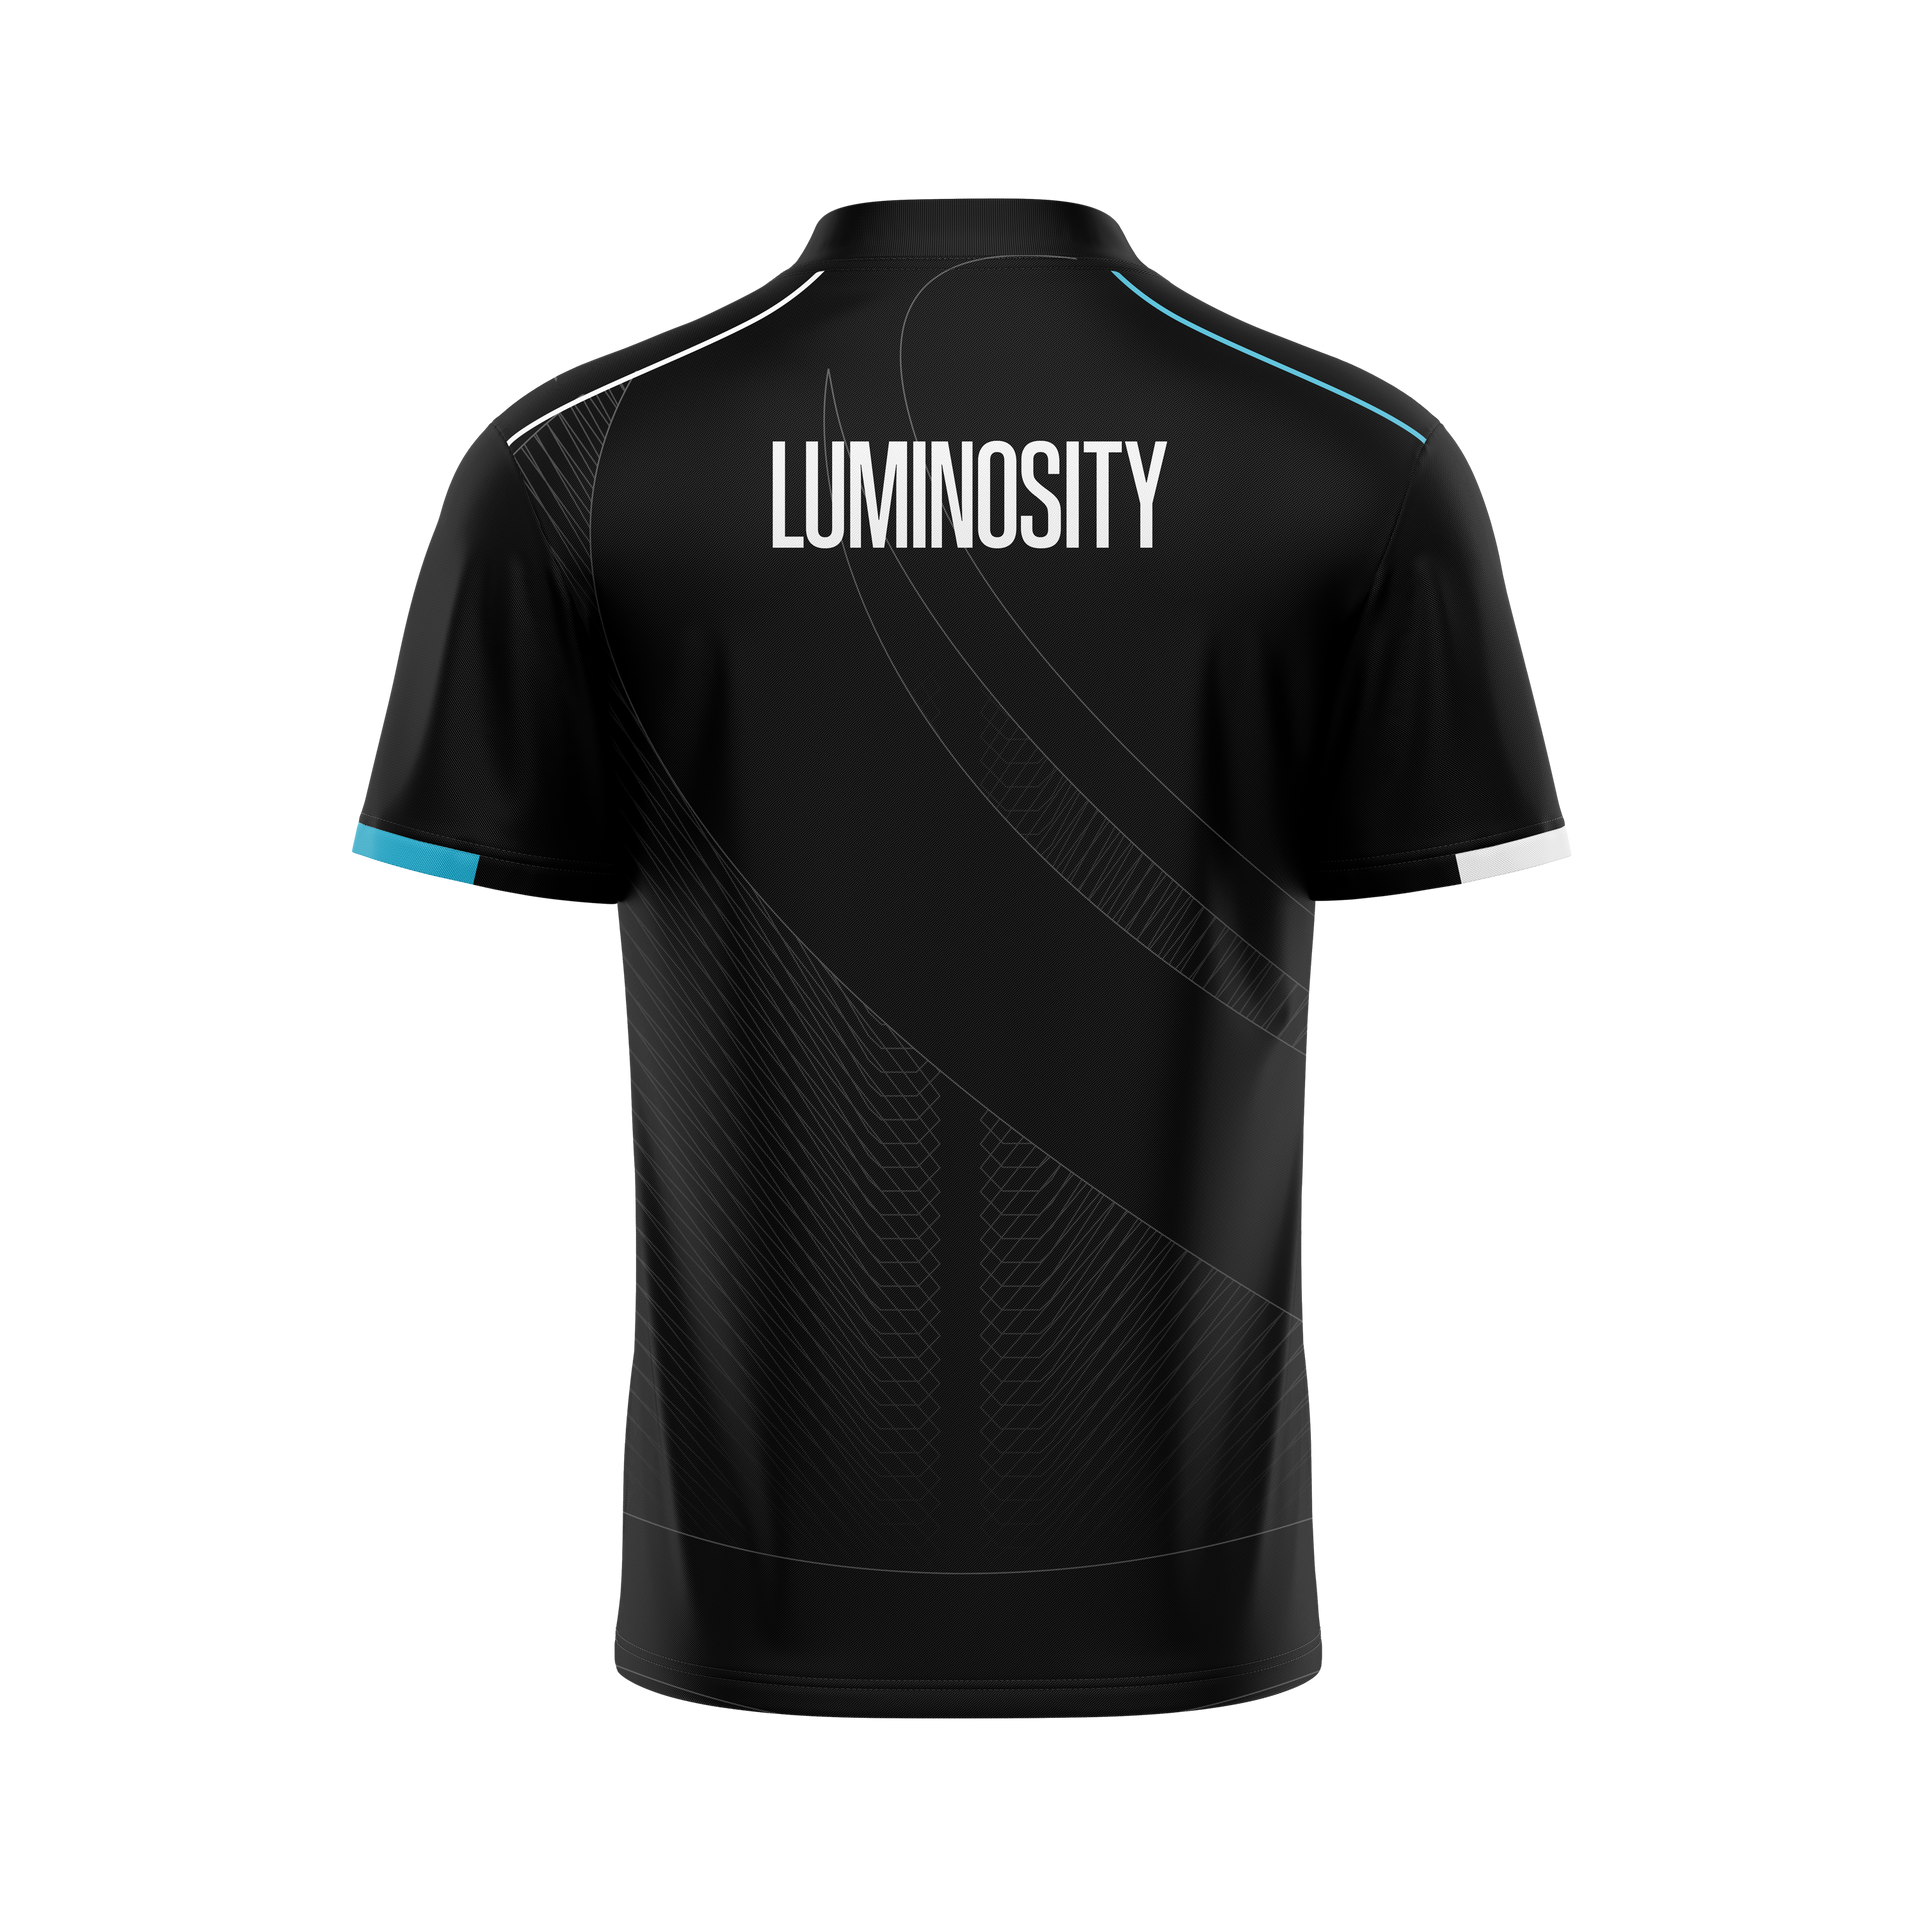 Luminosity Jersey - Black